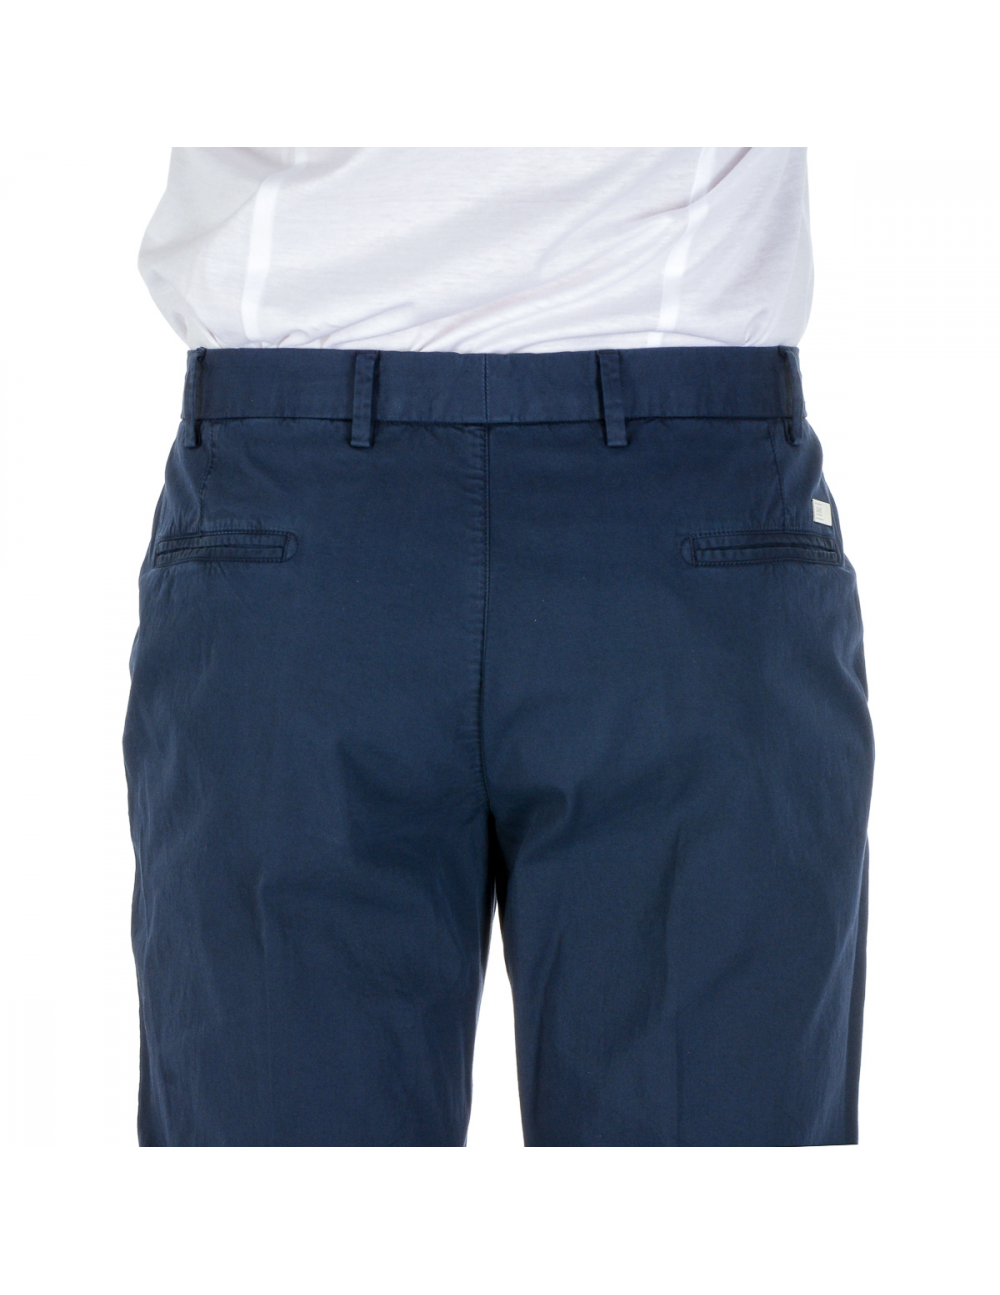 Armani Collezioni Mens Pants Dark Blue - YuppyCollections